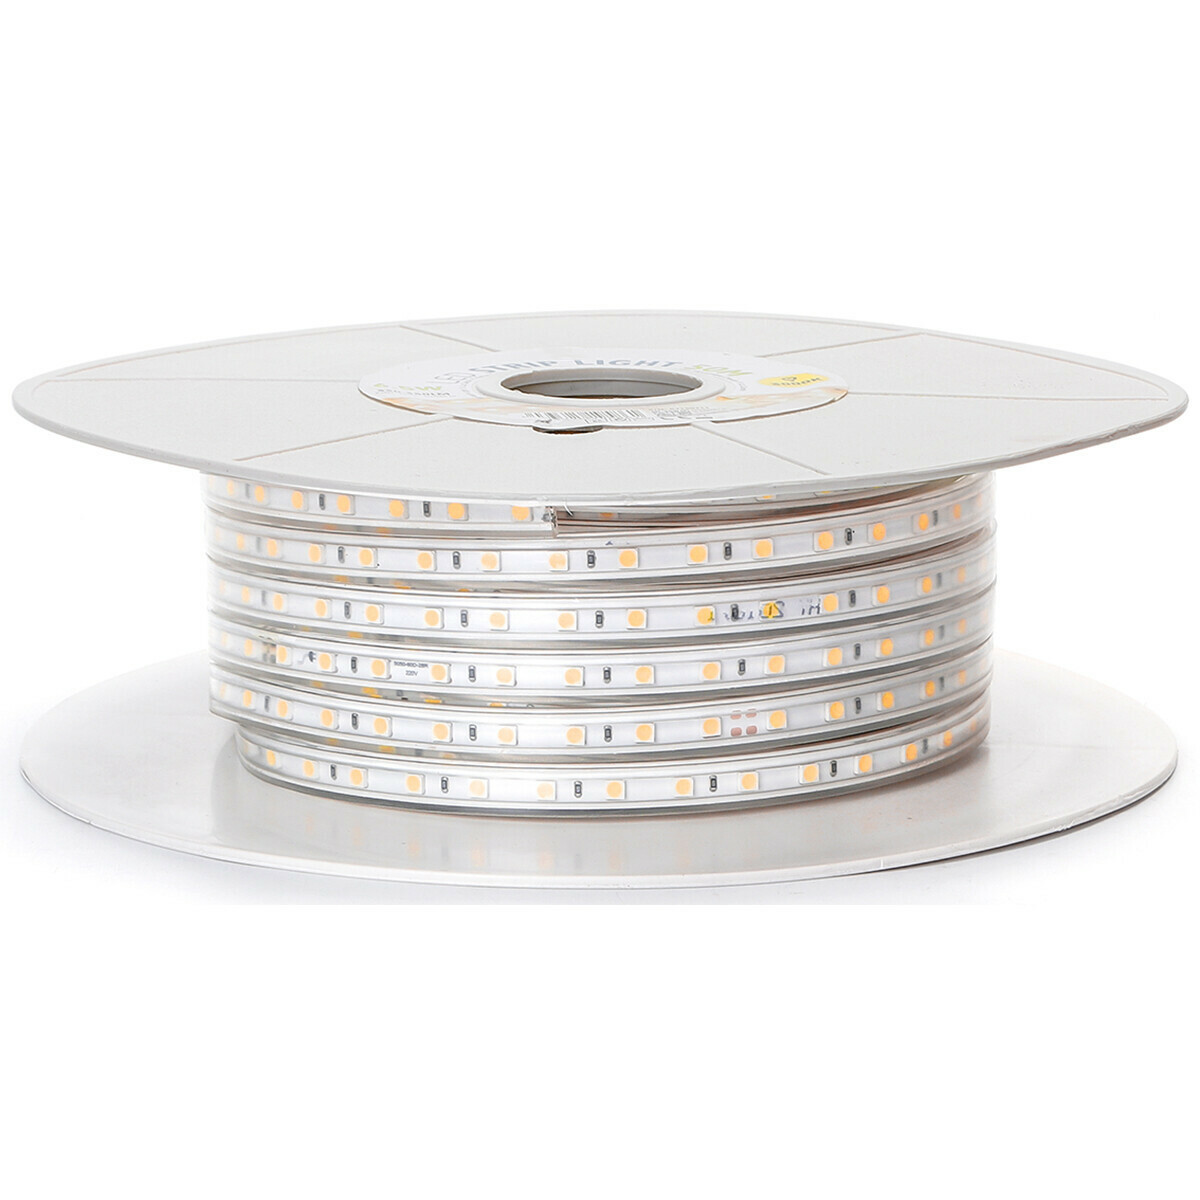 LED Strip - Aigi Stribo - 50 Meter - Dimmbar - IP65 Wasserdicht